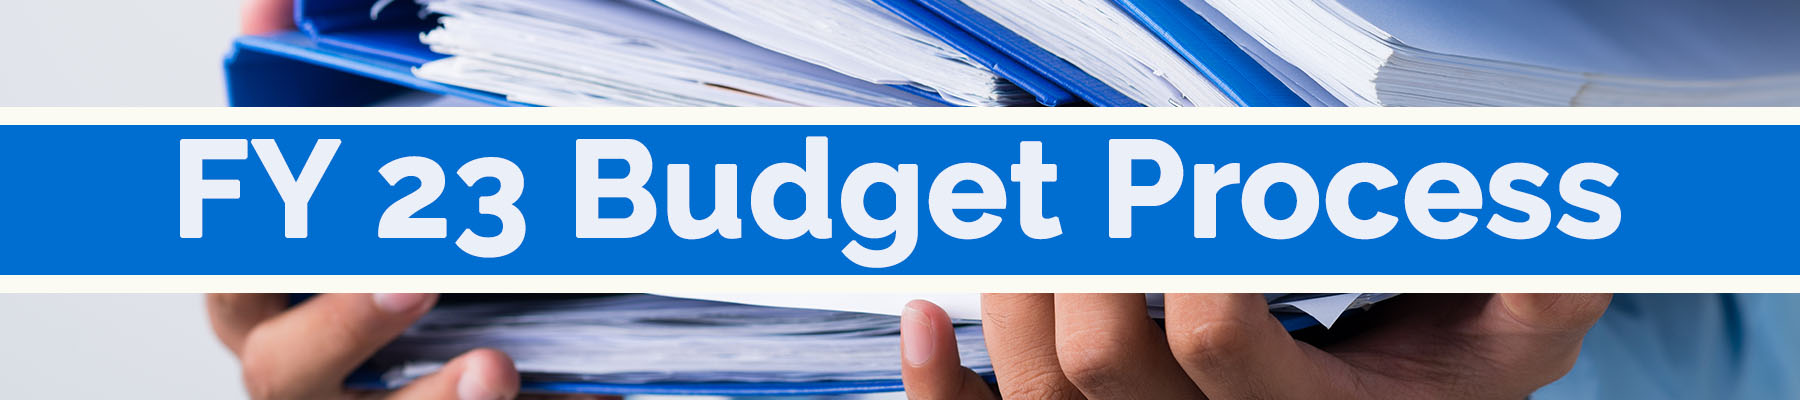 FY 23 Budget Process - Documents & Presentations